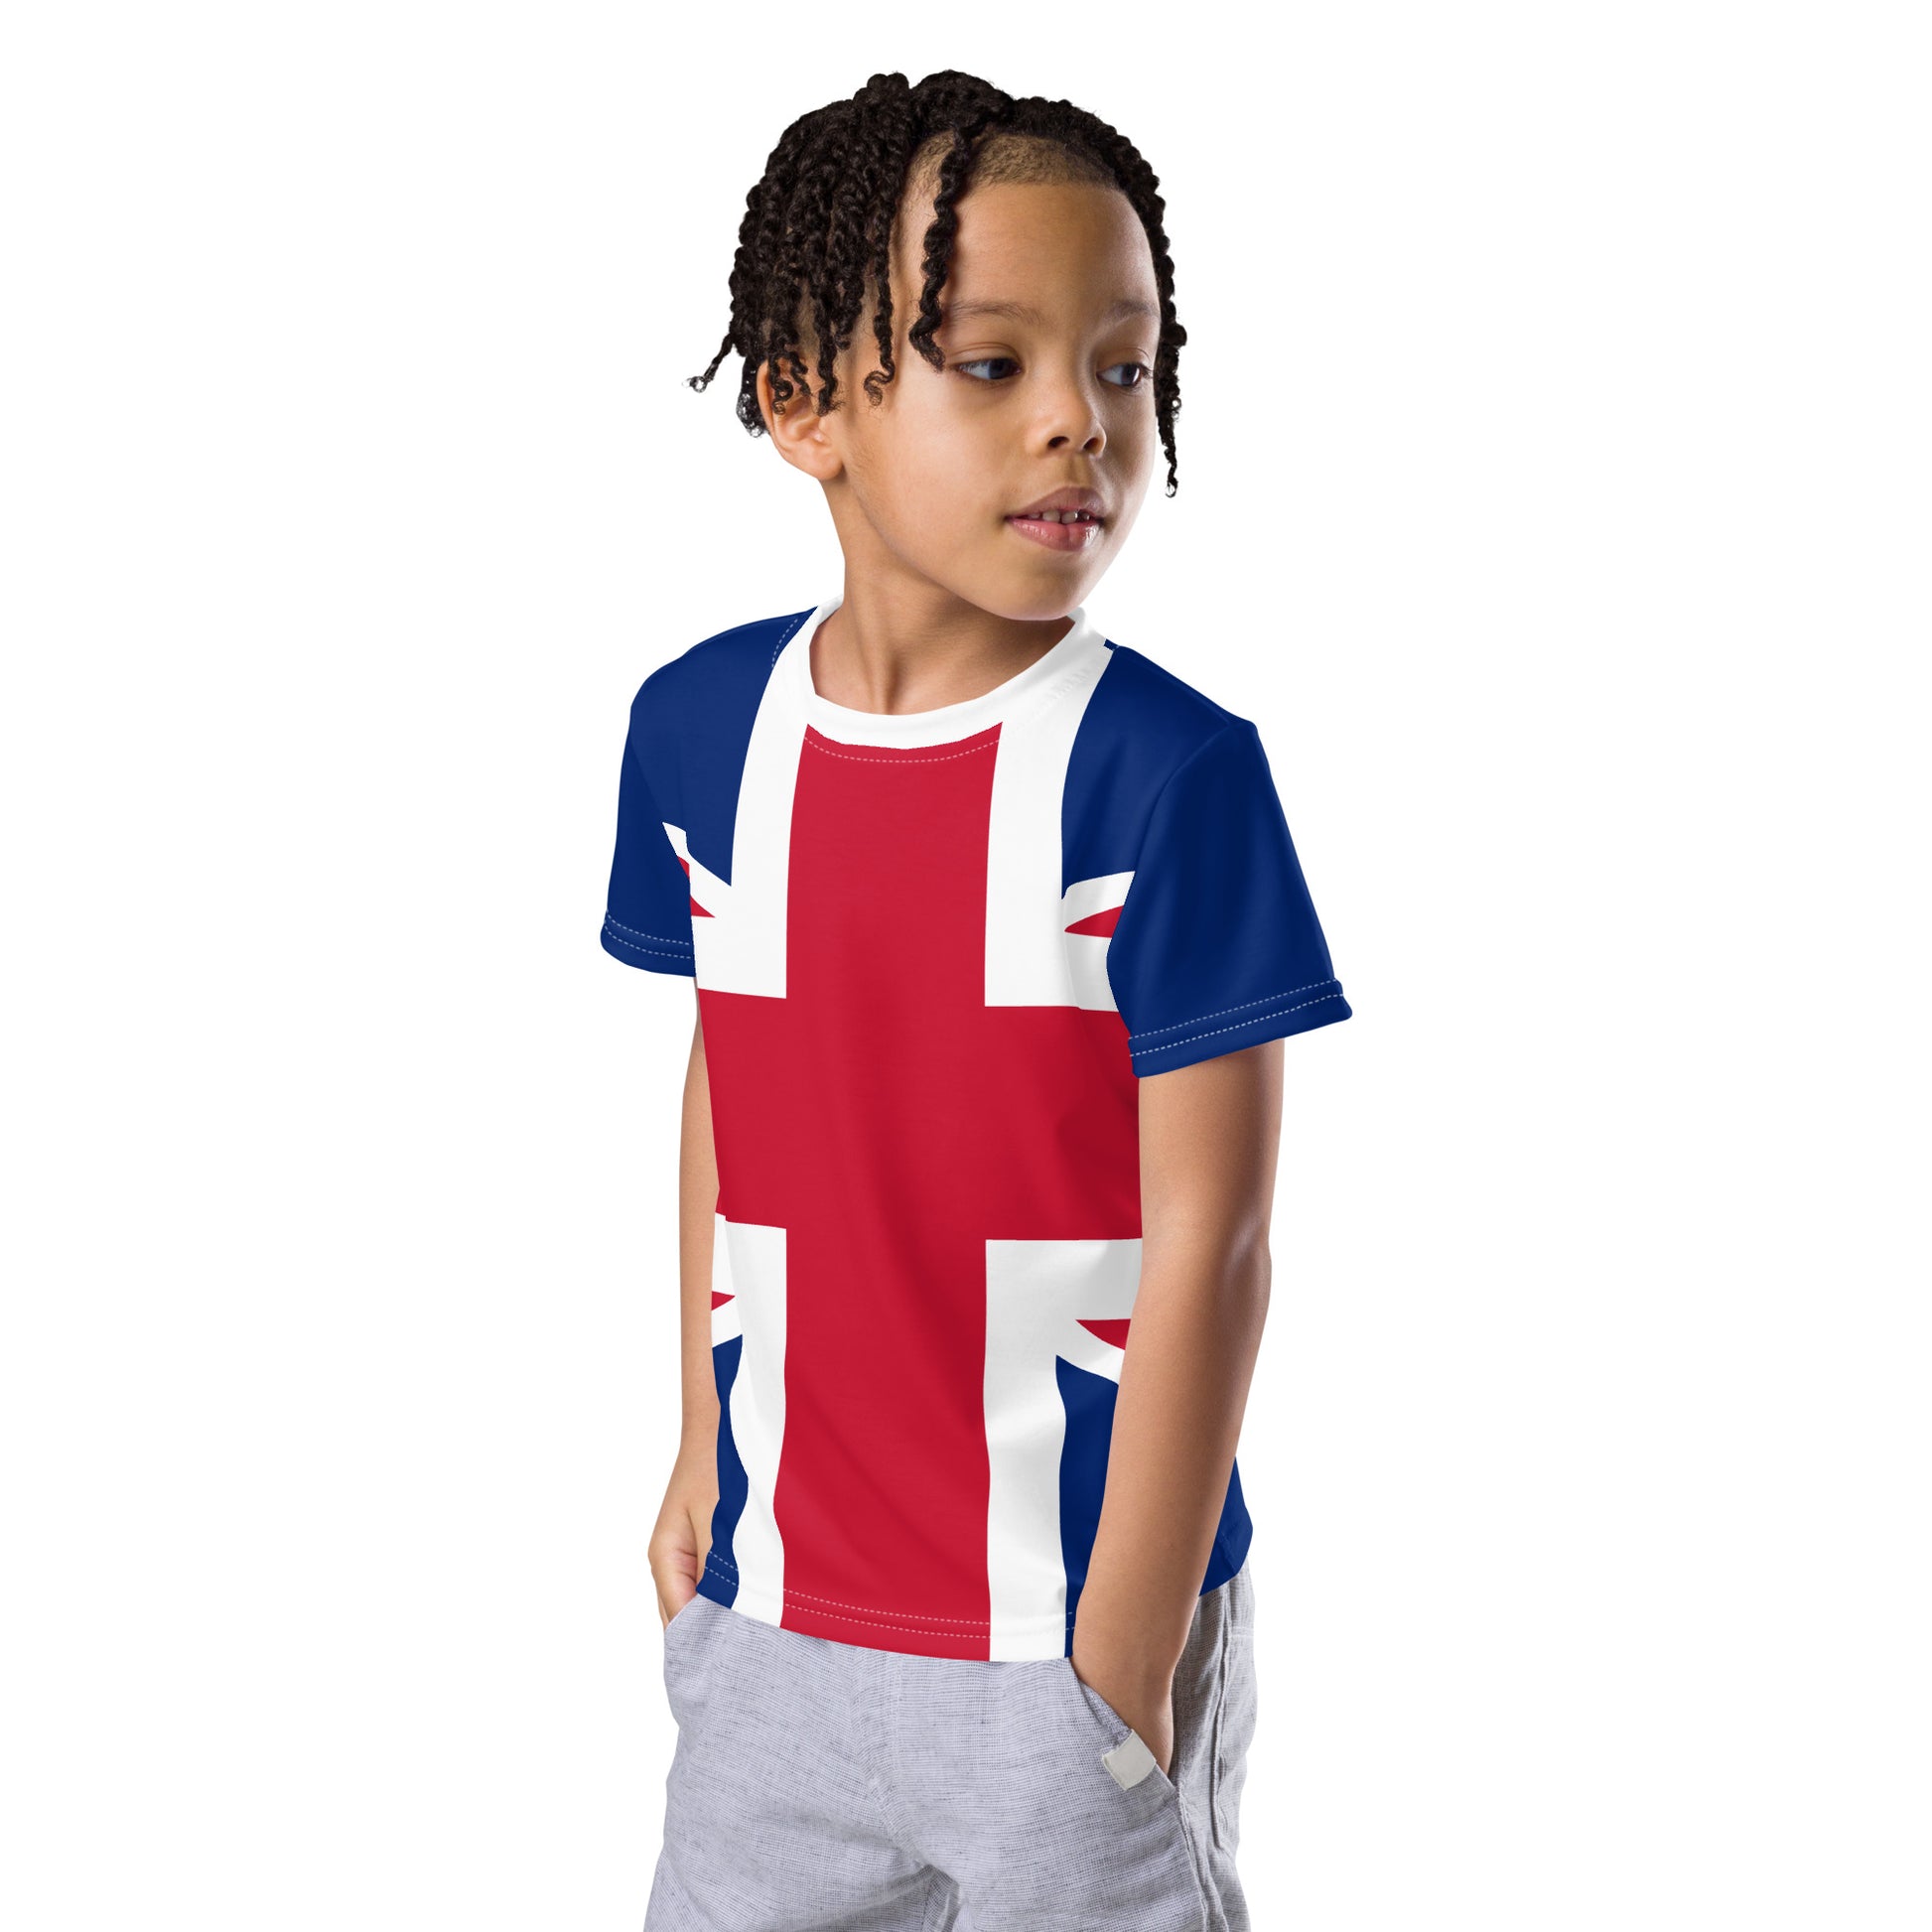 Kids Size Shirt For Boy